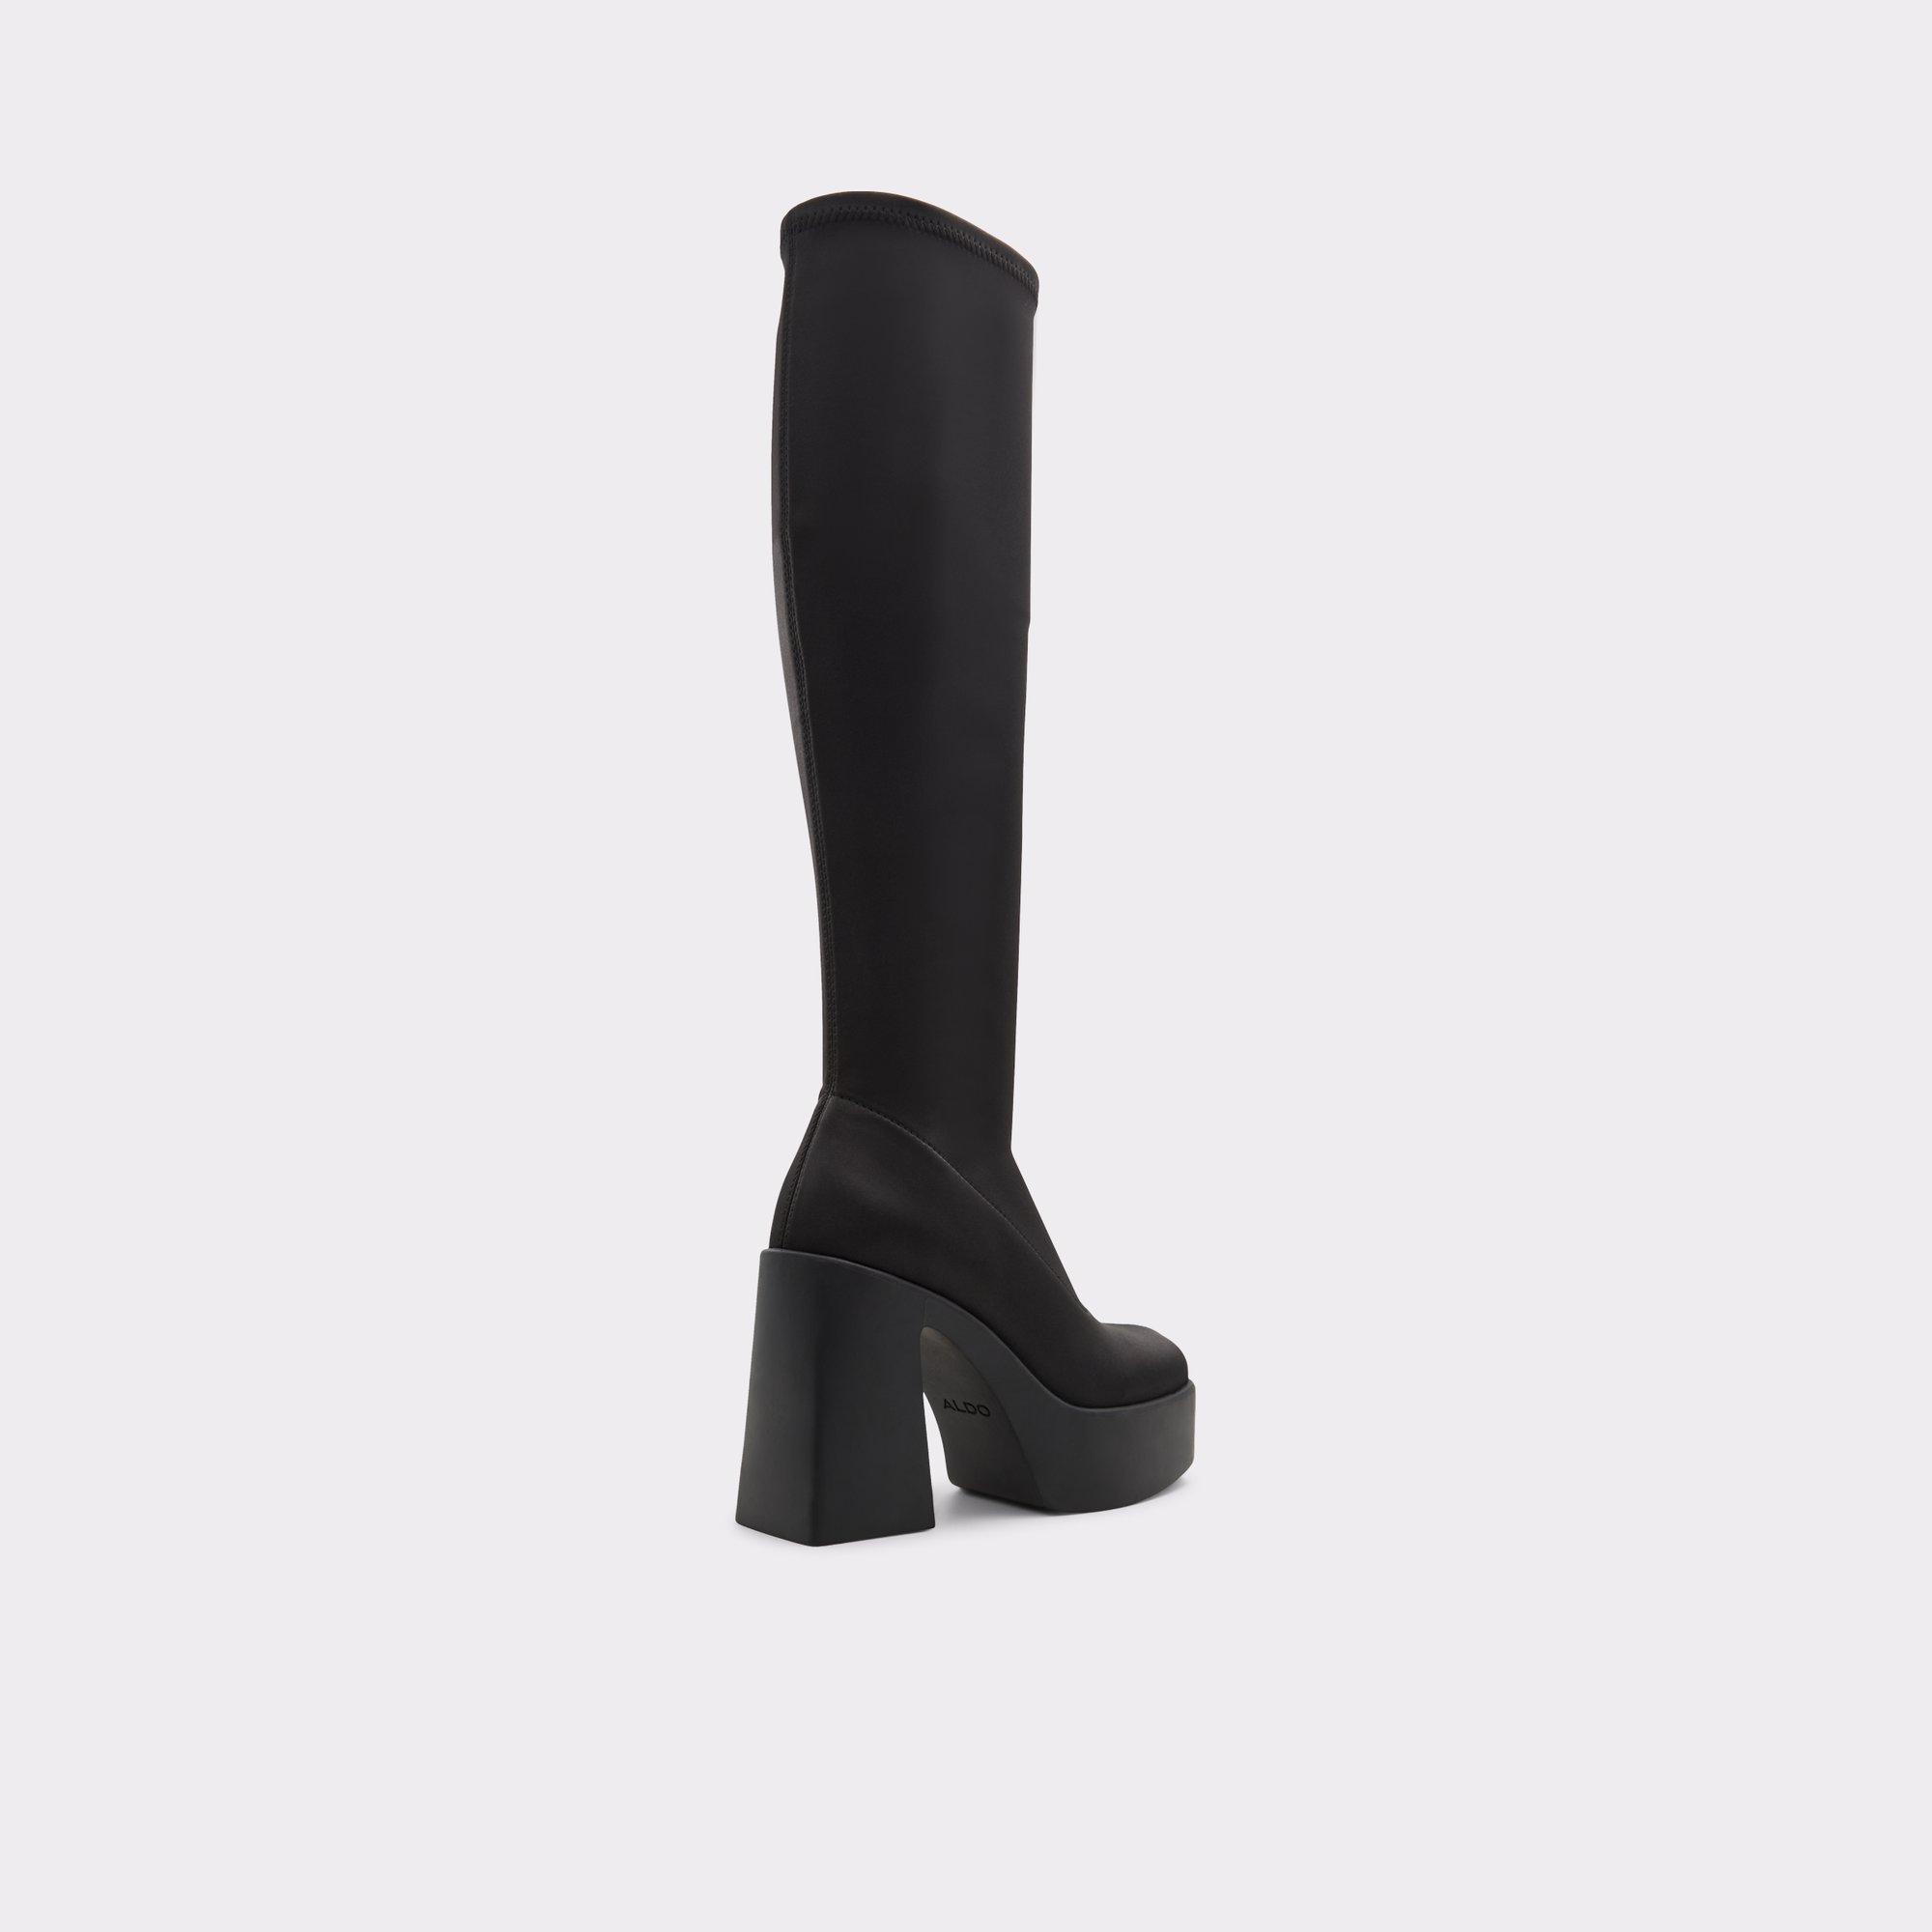 Moulin Black Textile Women's Dress heeled boots | ALDO US